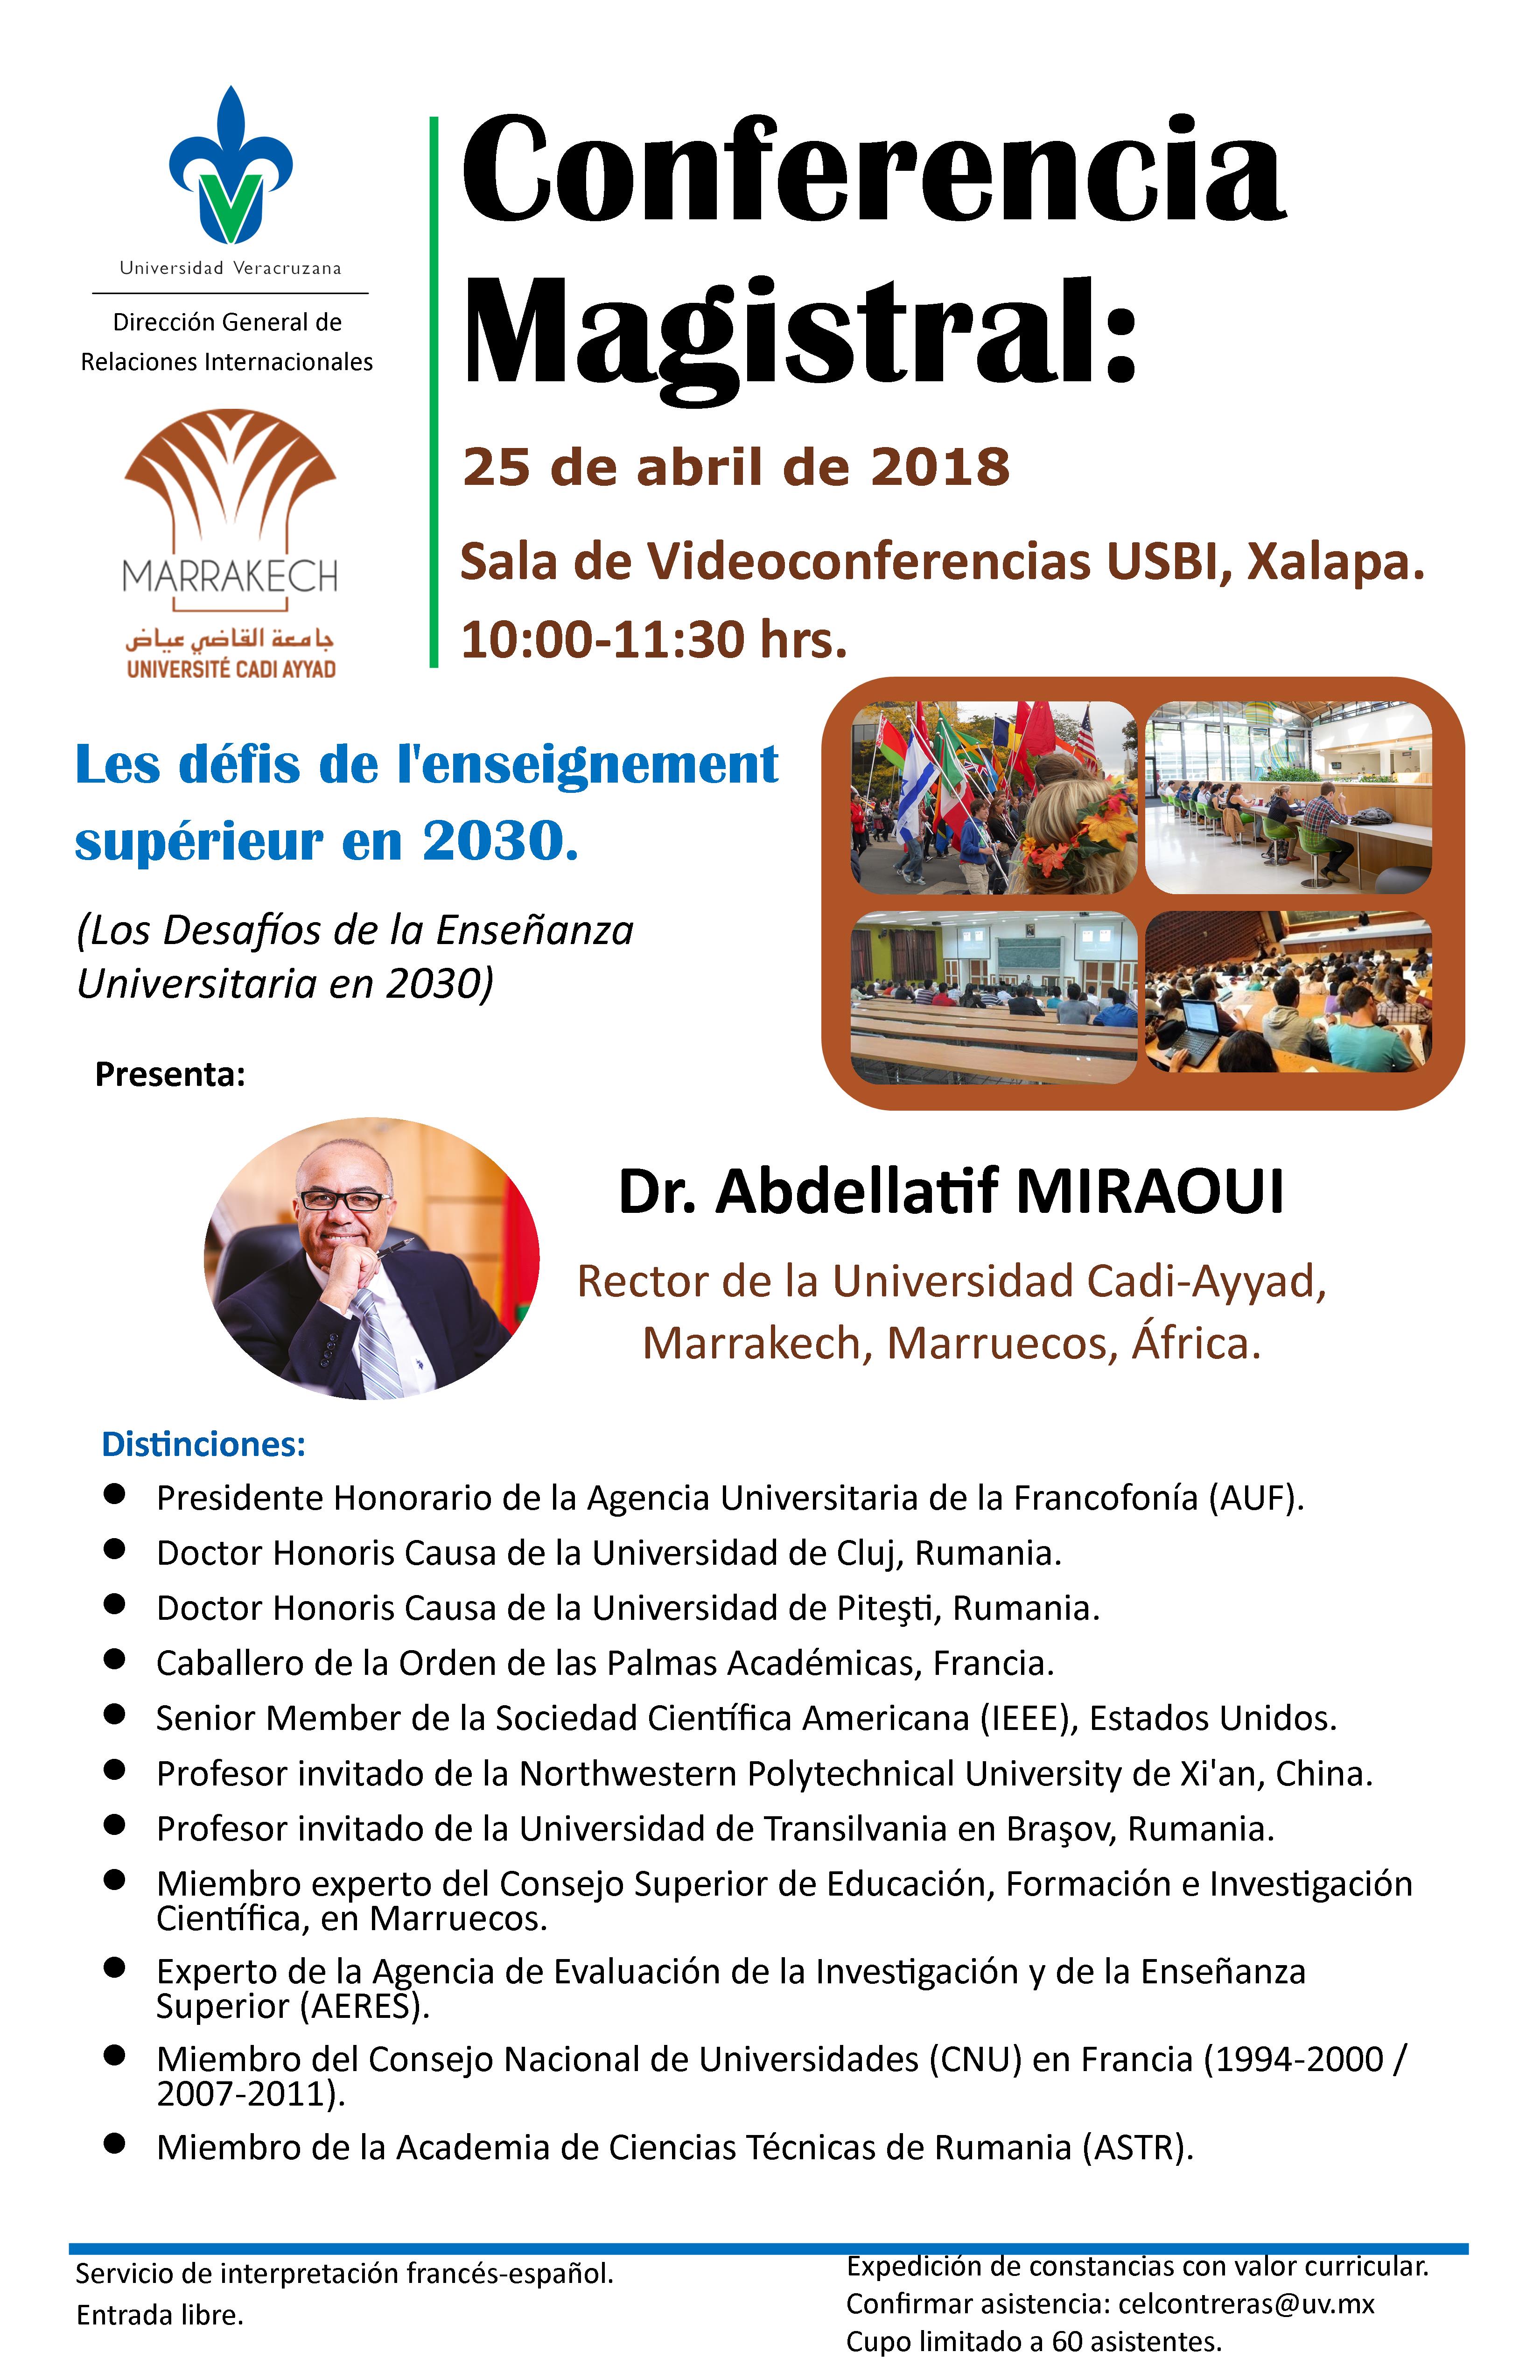 Cartel Conferencia Magistral: Adbellatif Miraoui Les défis de I'enseignement supérieur en 2030